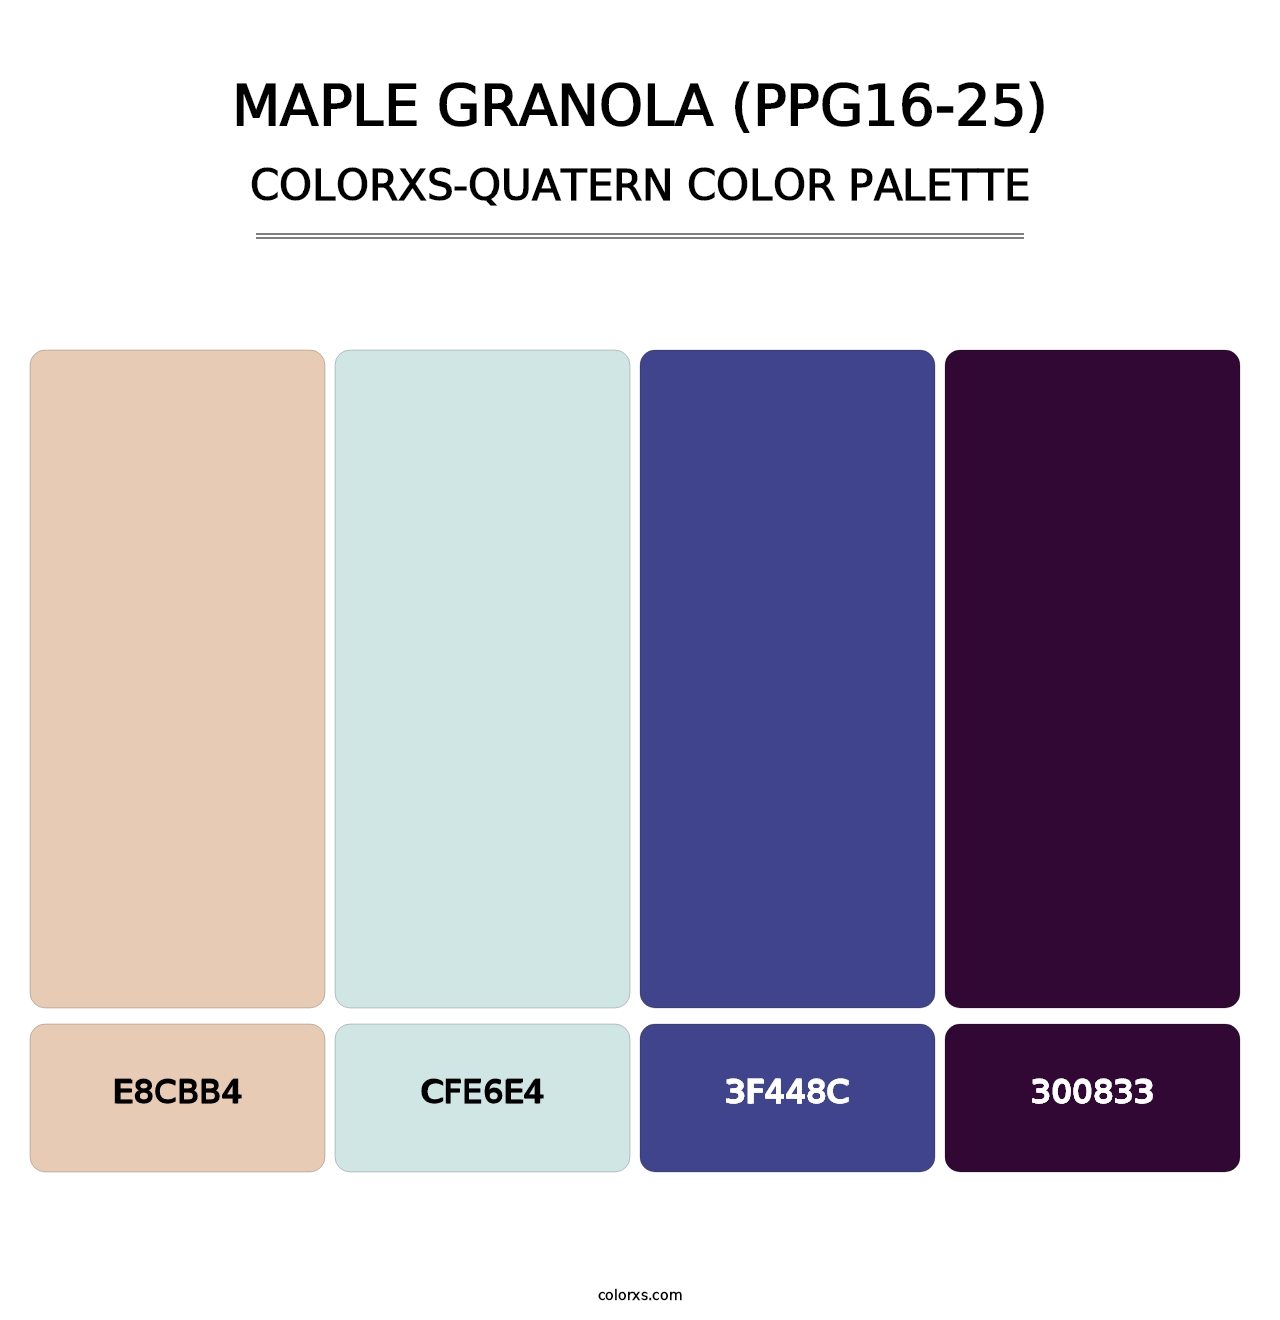 Maple Granola (PPG16-25) - Colorxs Quatern Palette